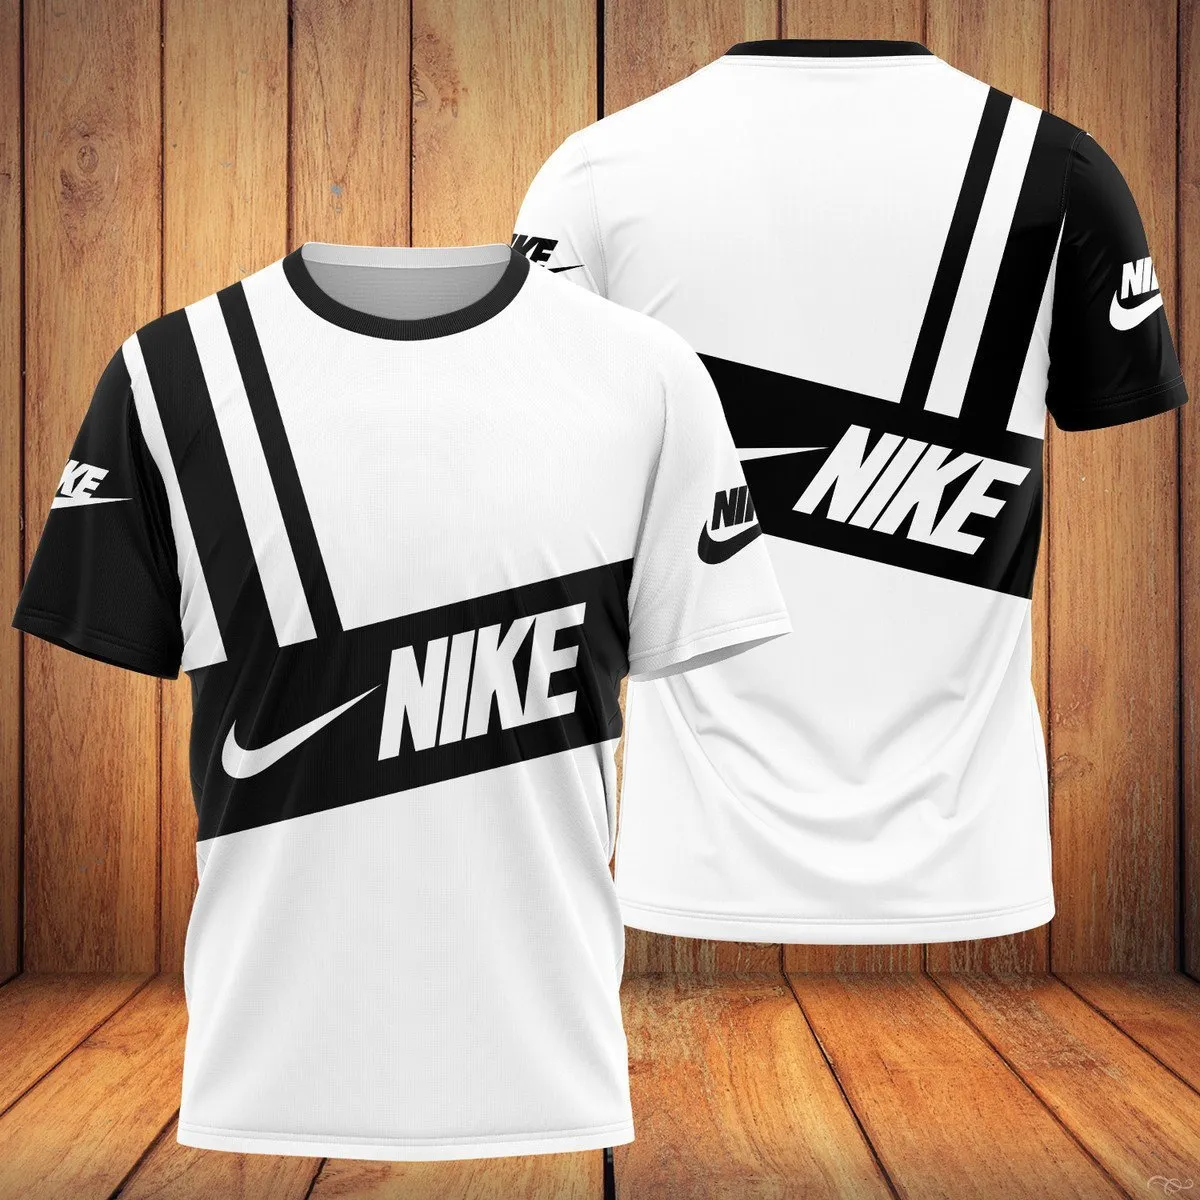 Nike White T Shirt Luxury Fashion Outfit